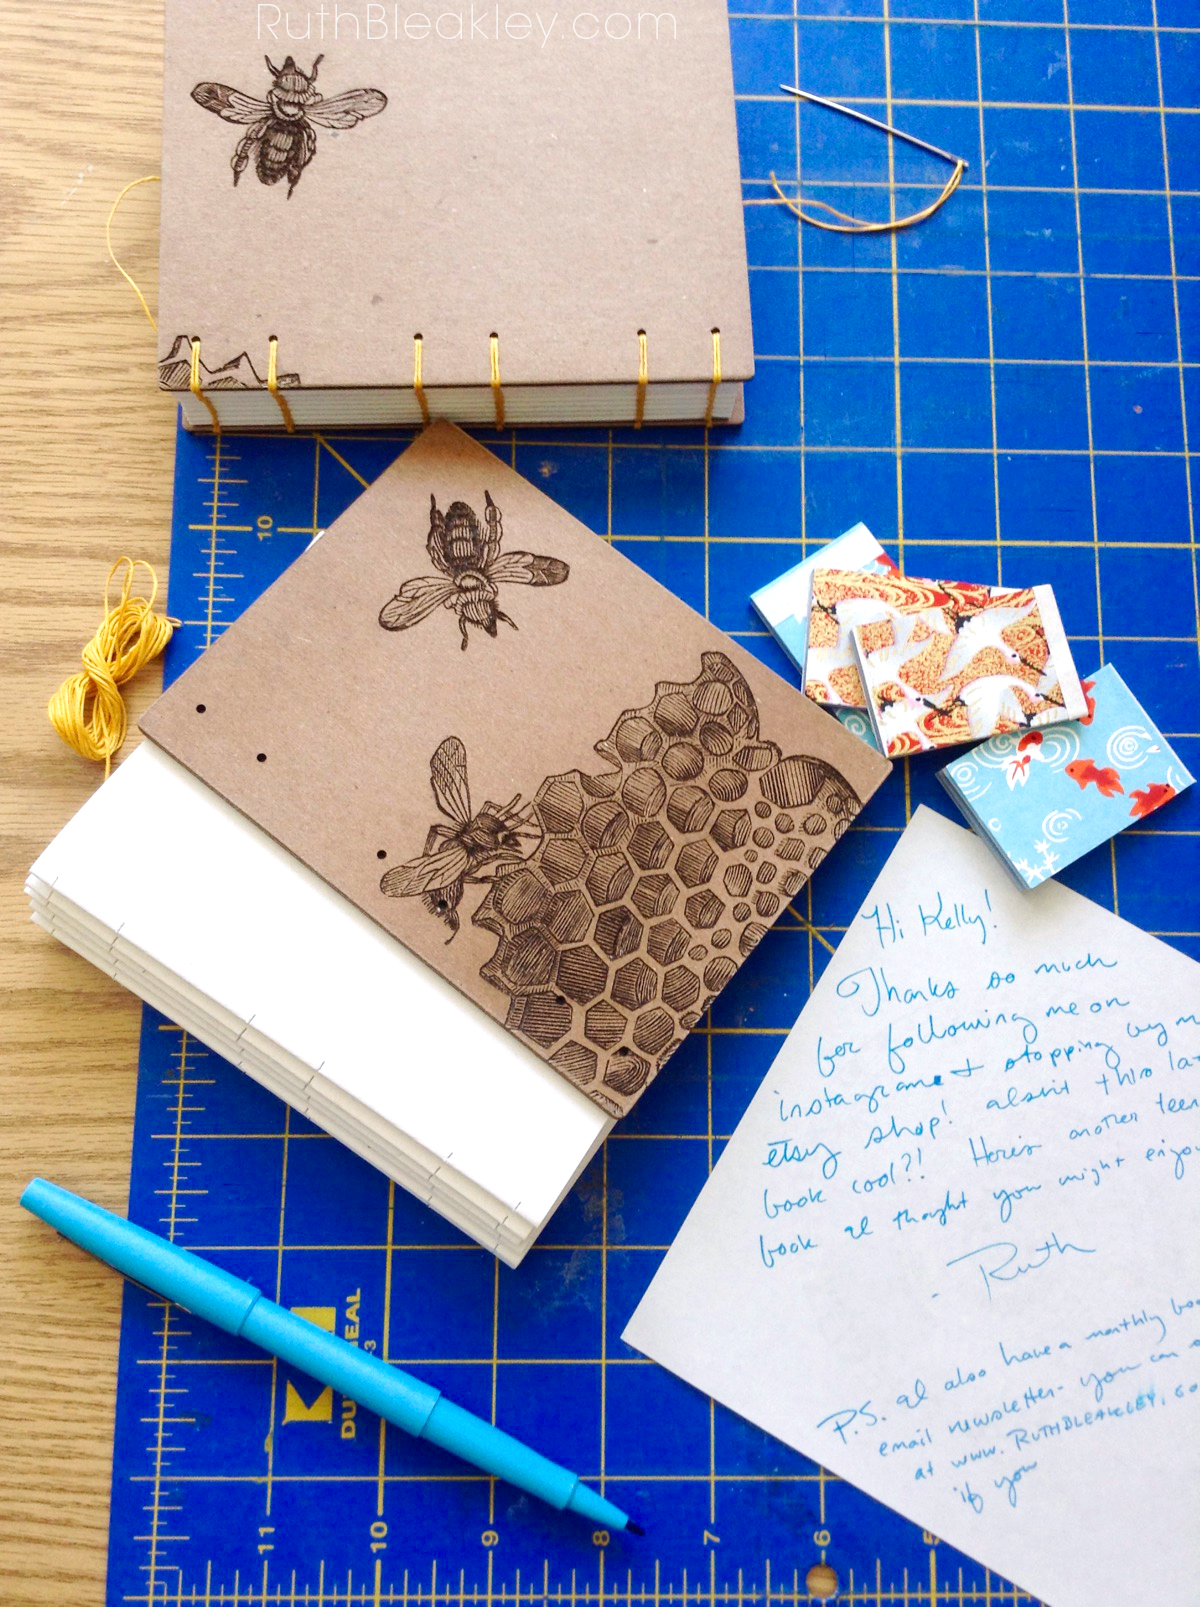 Honeybee Handmade Journals by Book Artist Ruth Bleakley